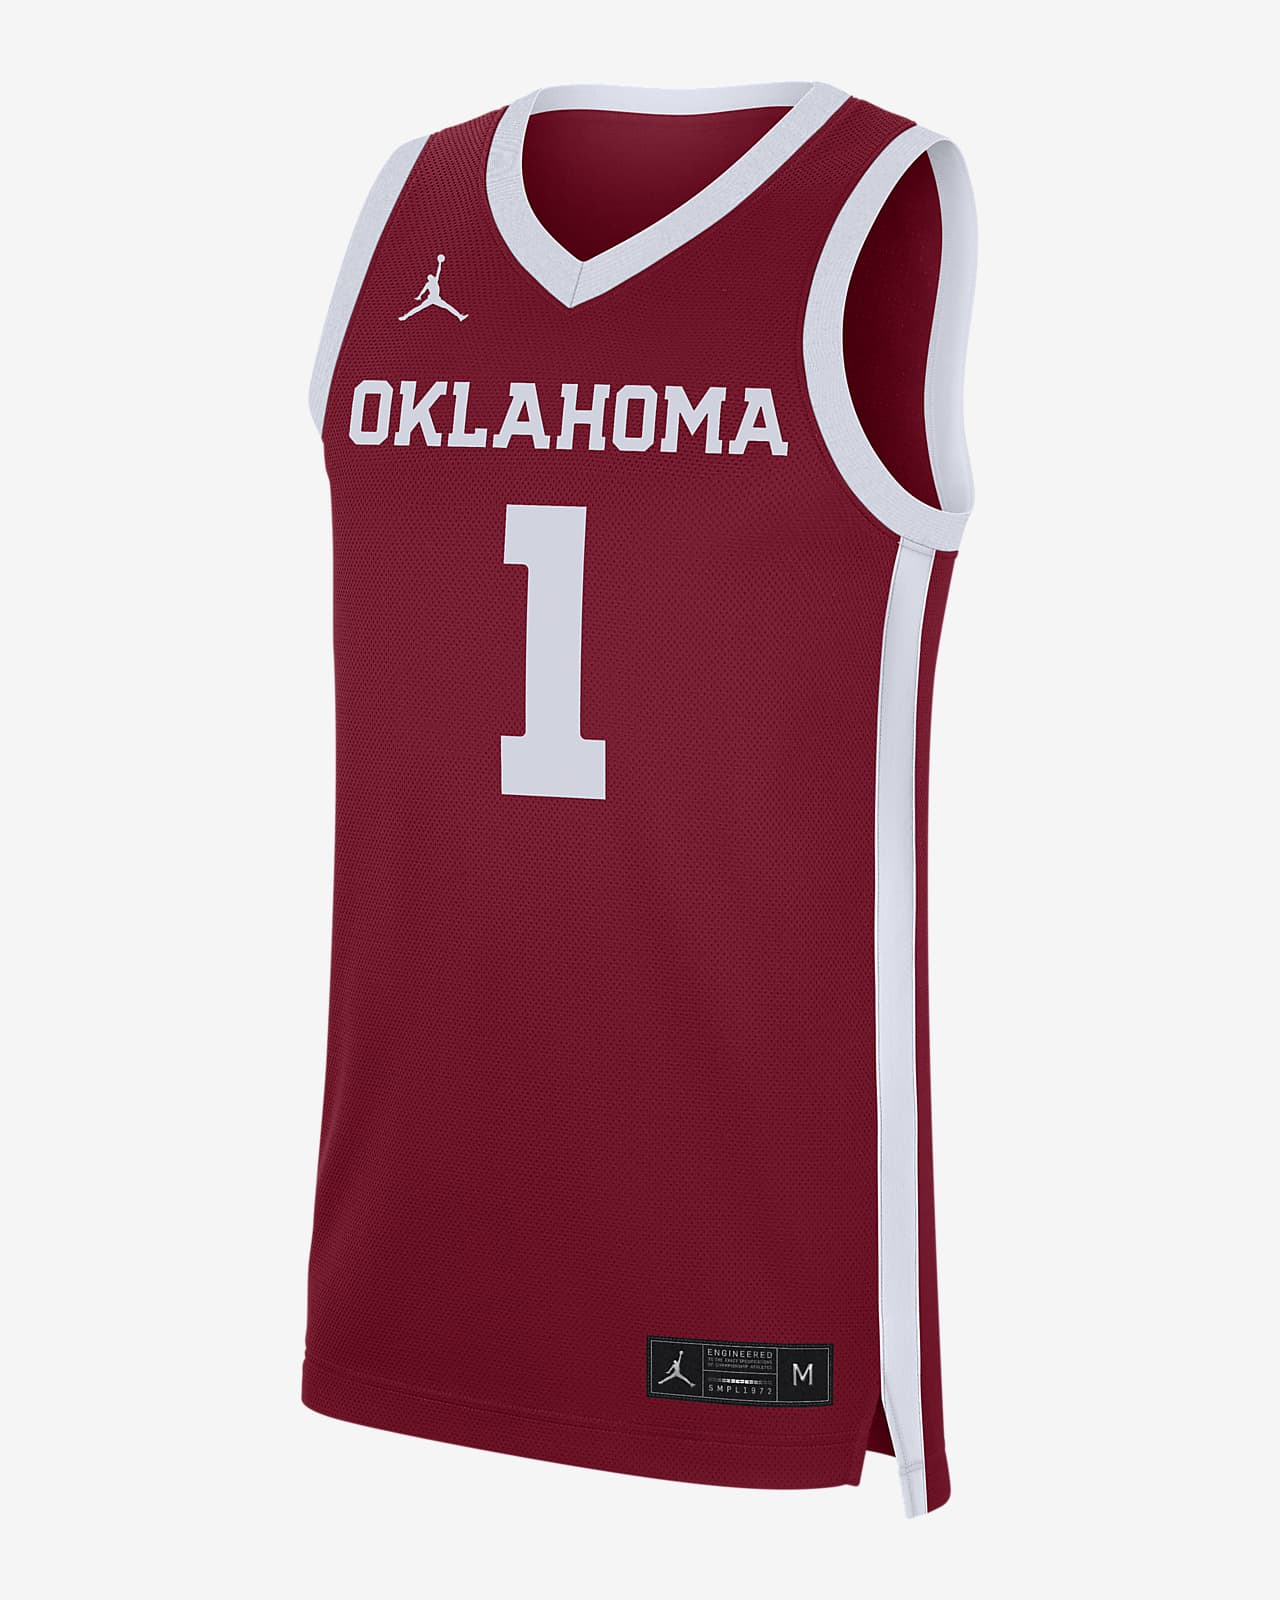 Nike College Replica (Oklahoma) Men's Basketball Jersey